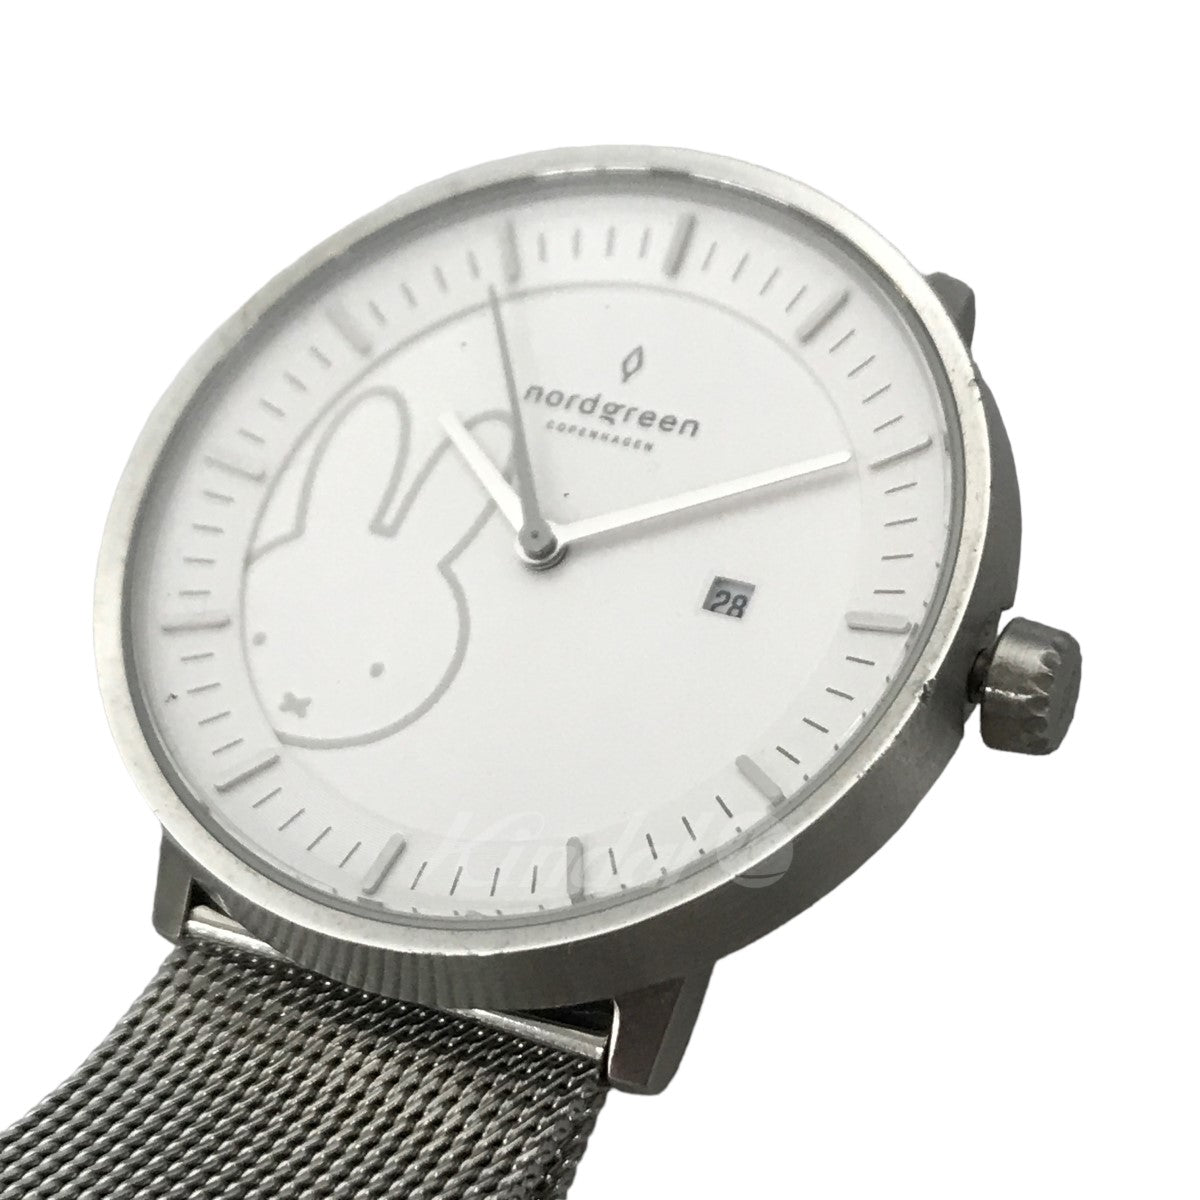 Miffy×Nordgreen(ミッフィー×ノードグリーン) 腕時計 リストウォッチ